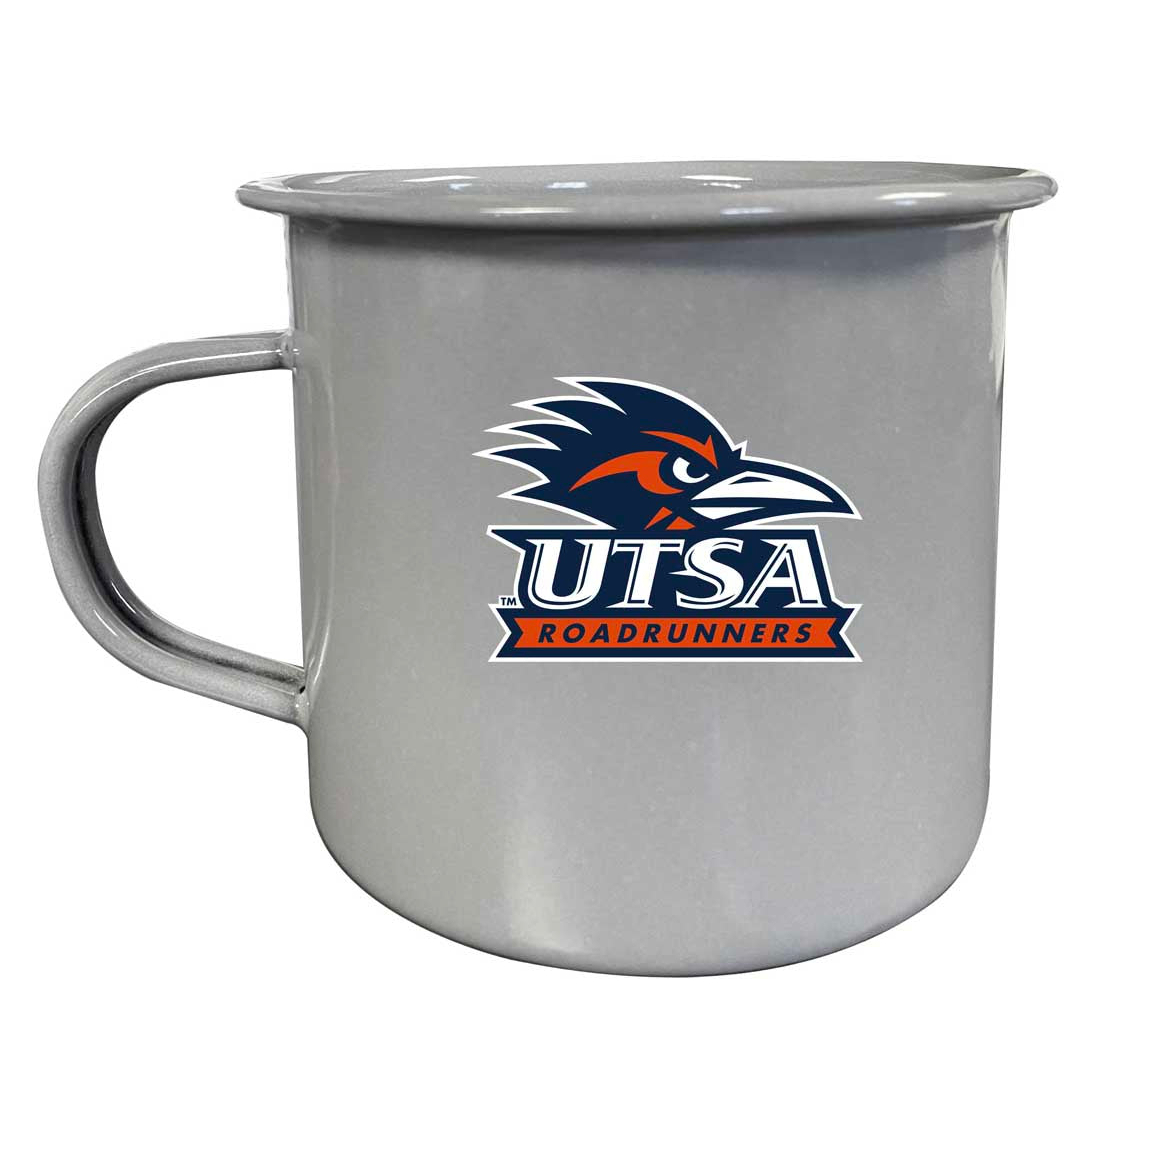 UTSA Road Runners Tin Camper Coffee Mug - Choose Your Color - White